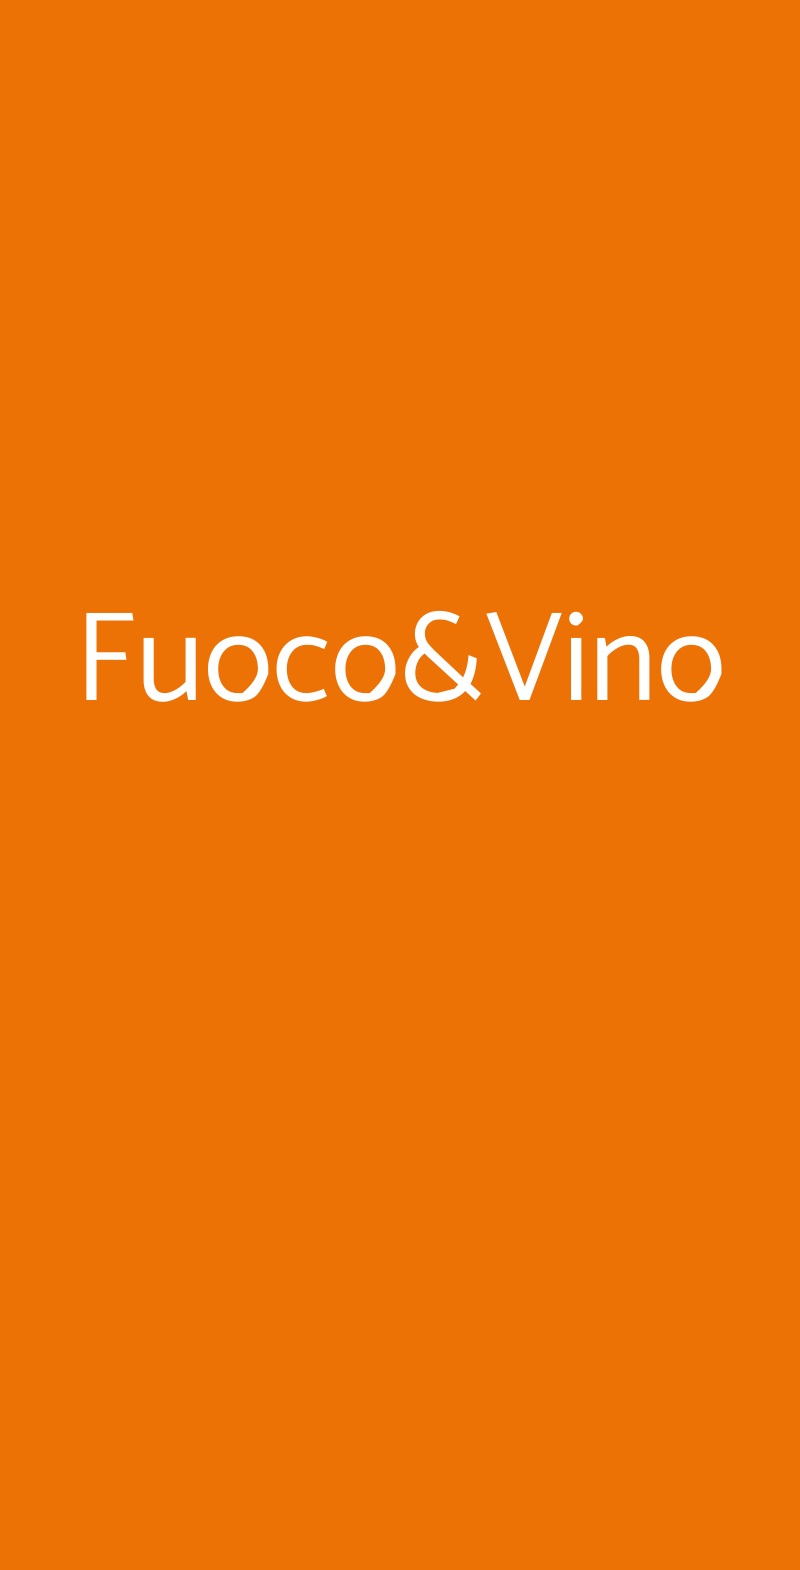 Fuoco&Vino Paderno Dugnano menù 1 pagina